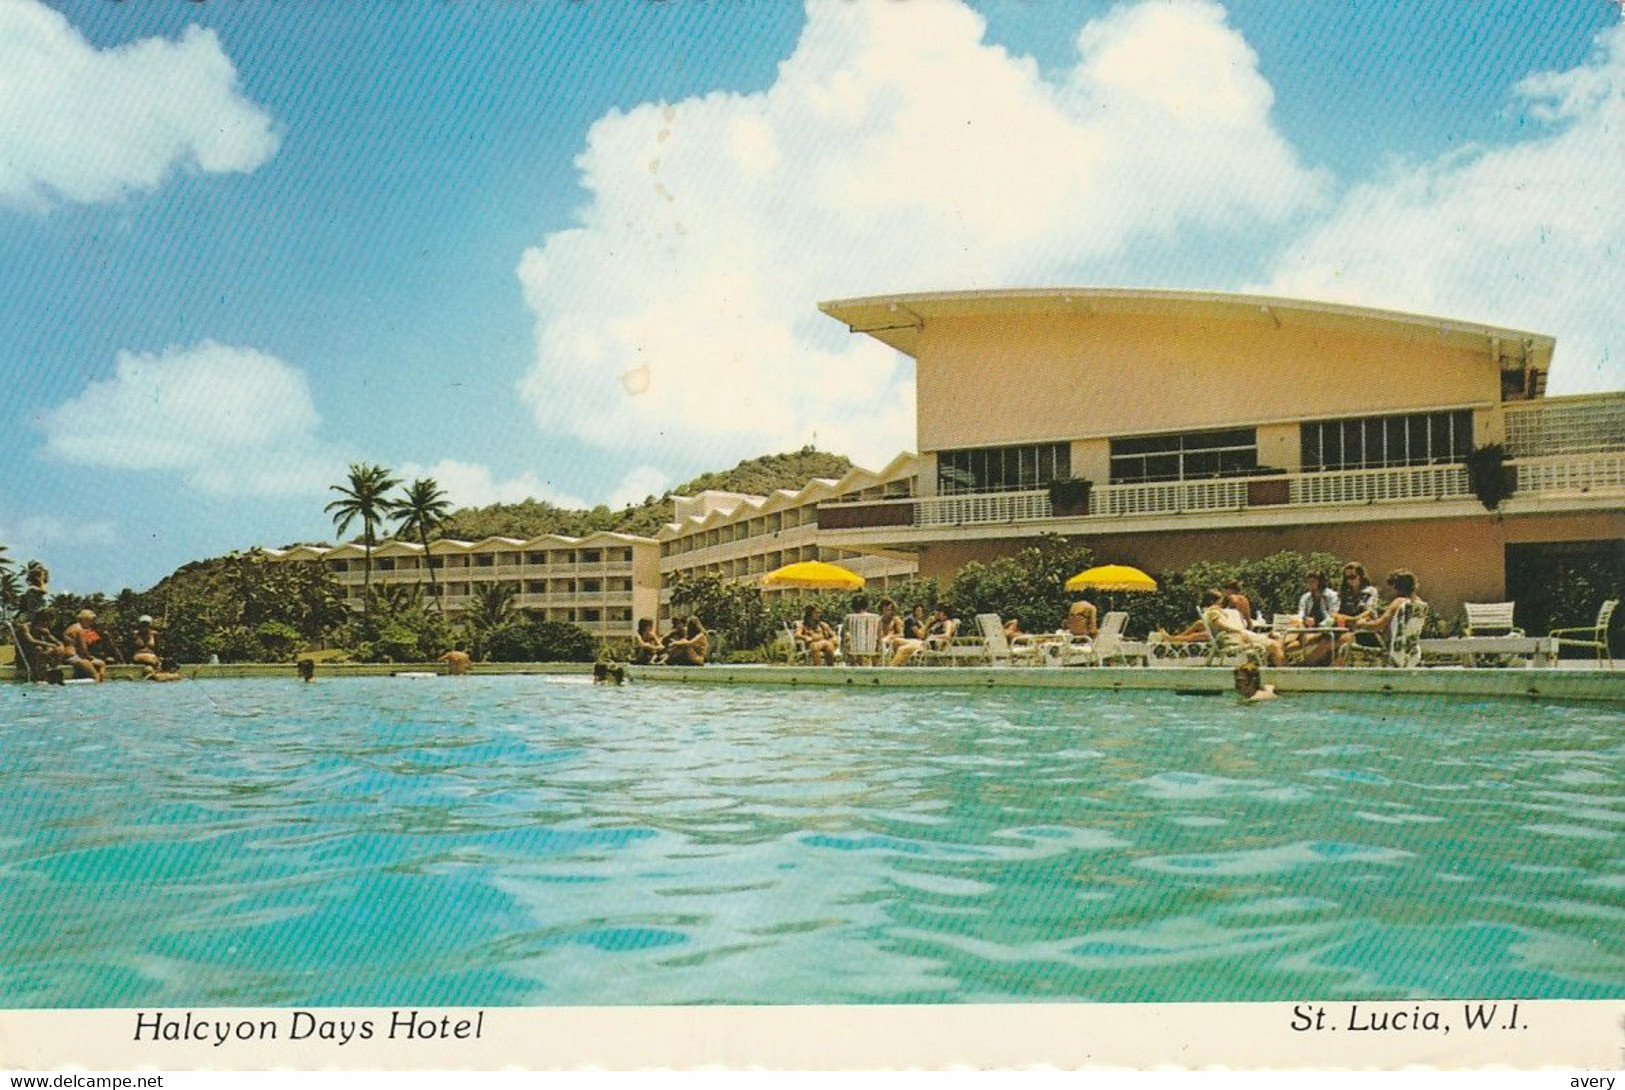 Halcyon Days Hotel, St. Lucia, West Indies - Saint Lucia